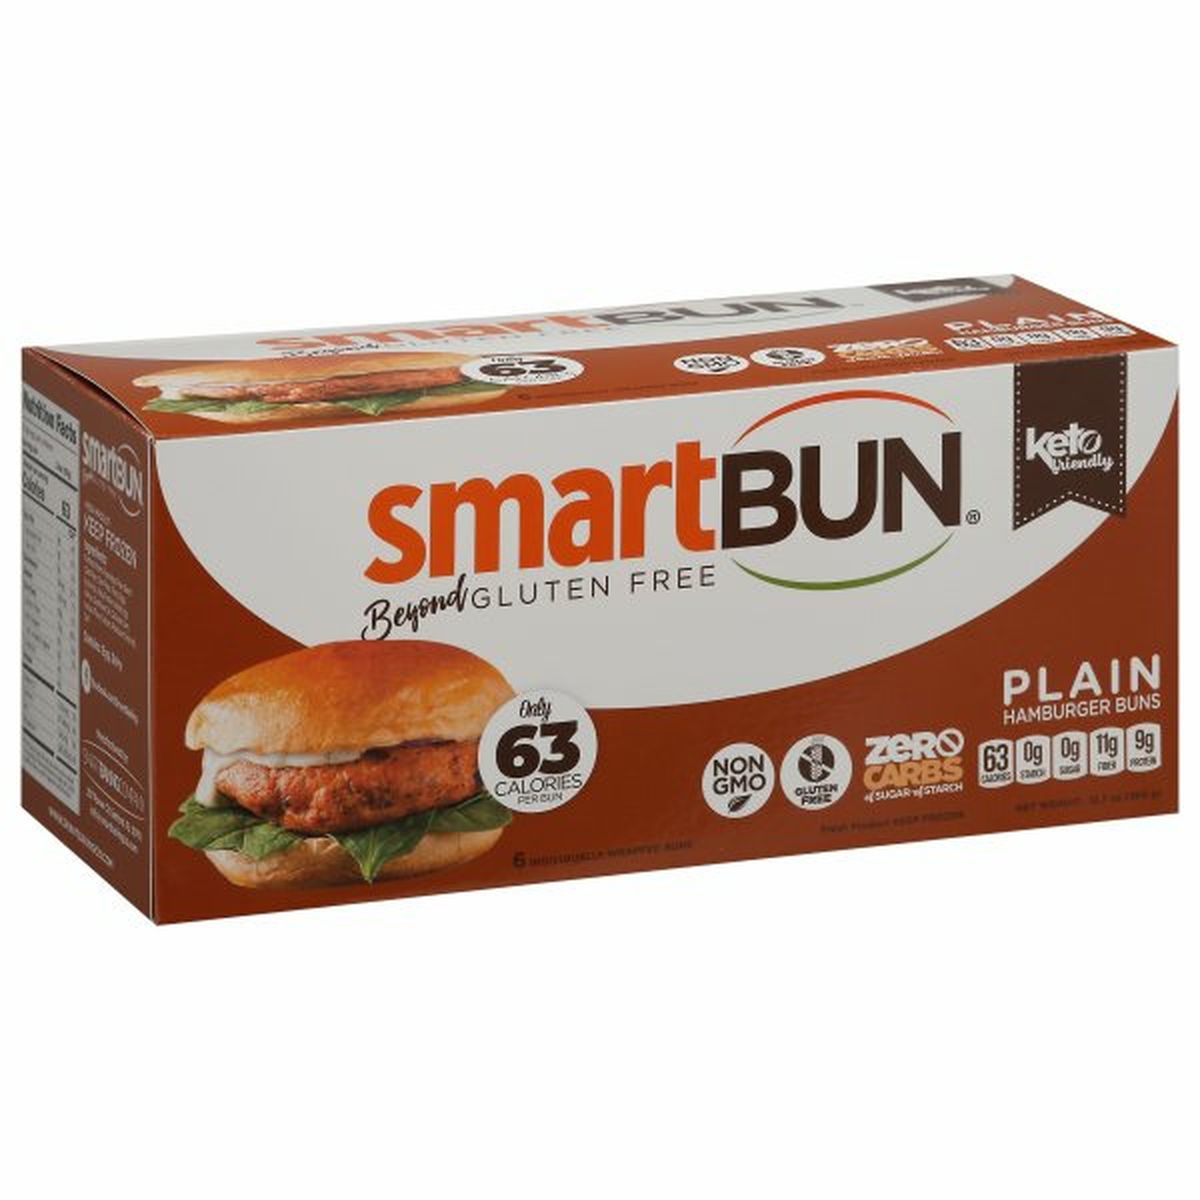 Calories in SmartBun Beyond Gluten Free Hamburger Buns, Plain